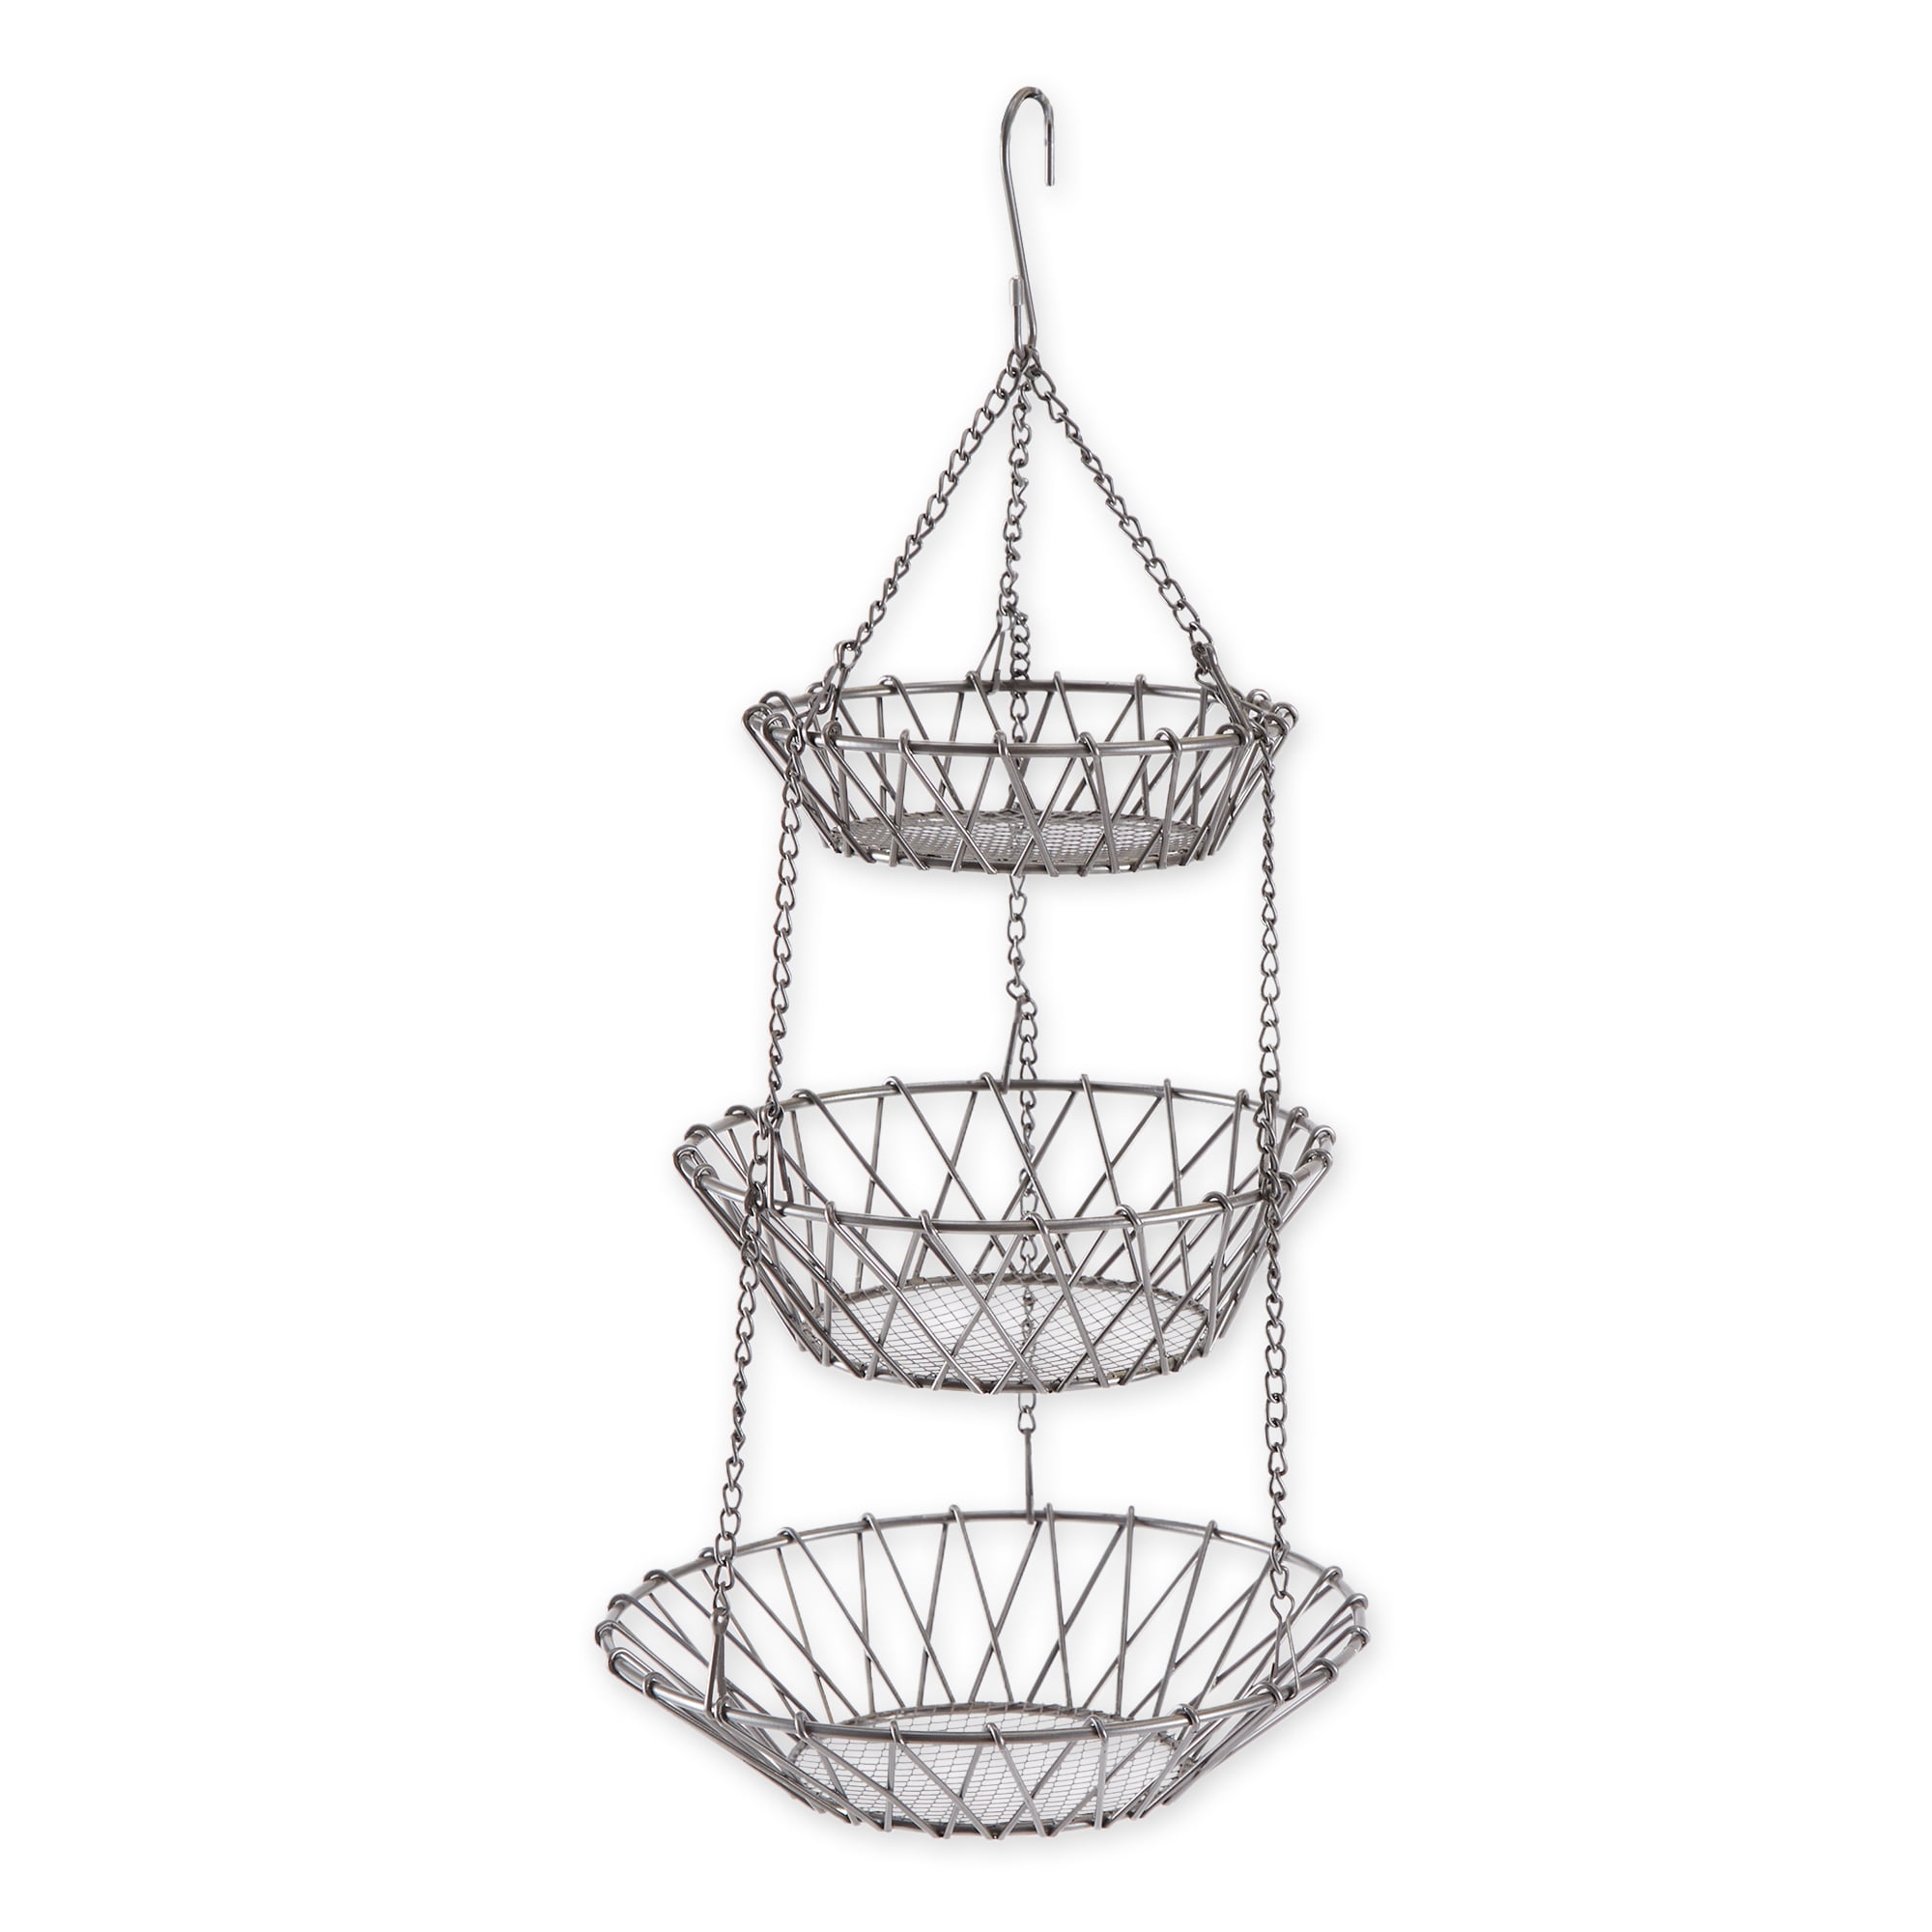 Picture of Design Imports CBBB01331 Satin Nickel 3 Tier Hanging Fruit Basket